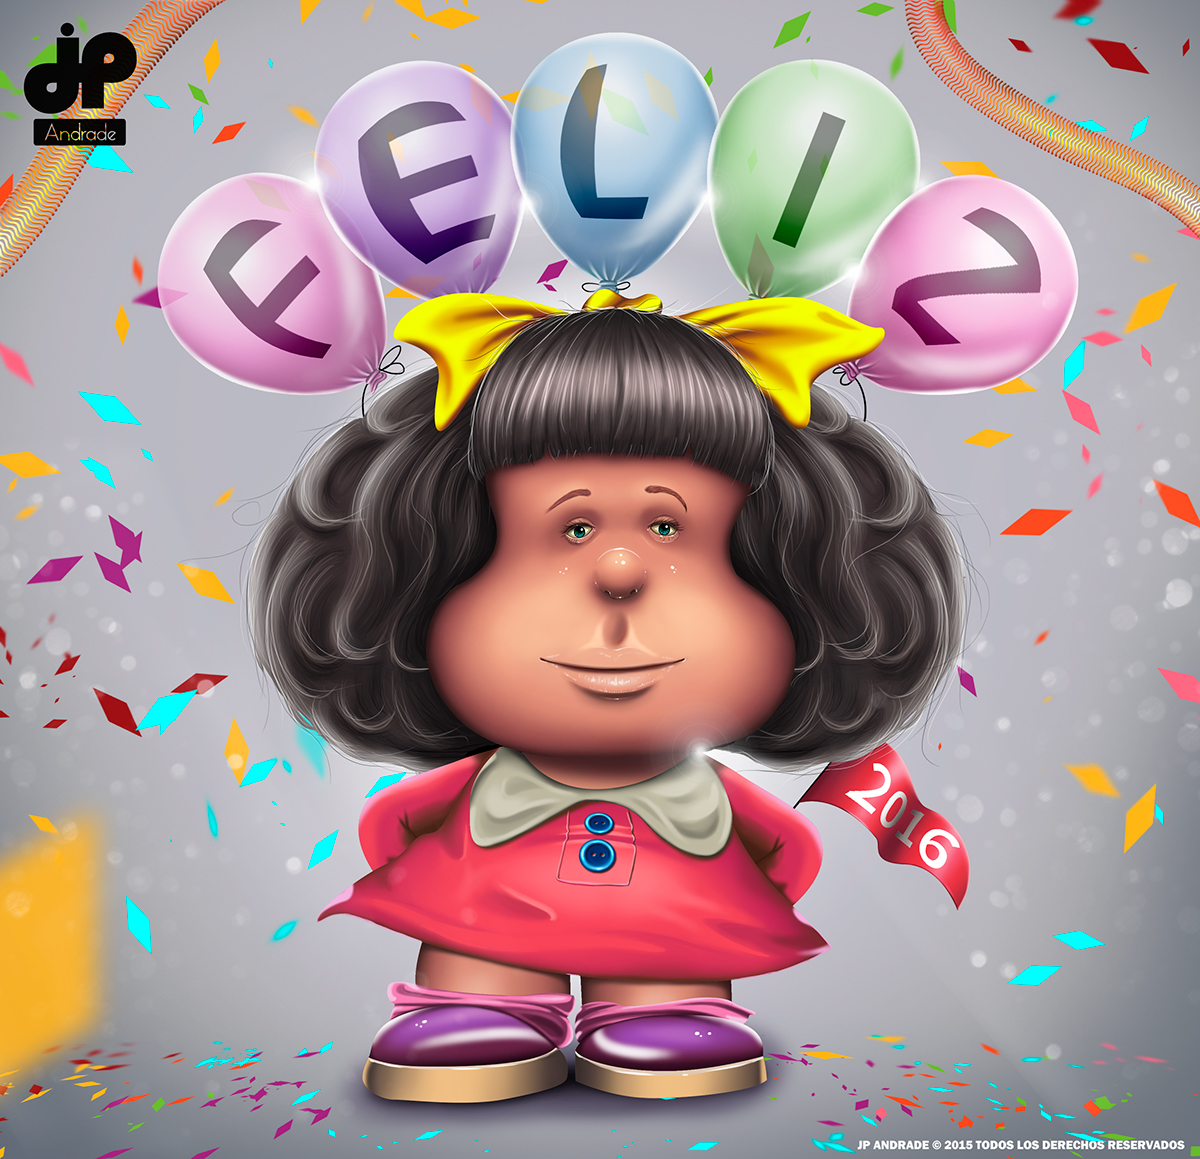 mafalda digital painting photoshop wacom feliz año